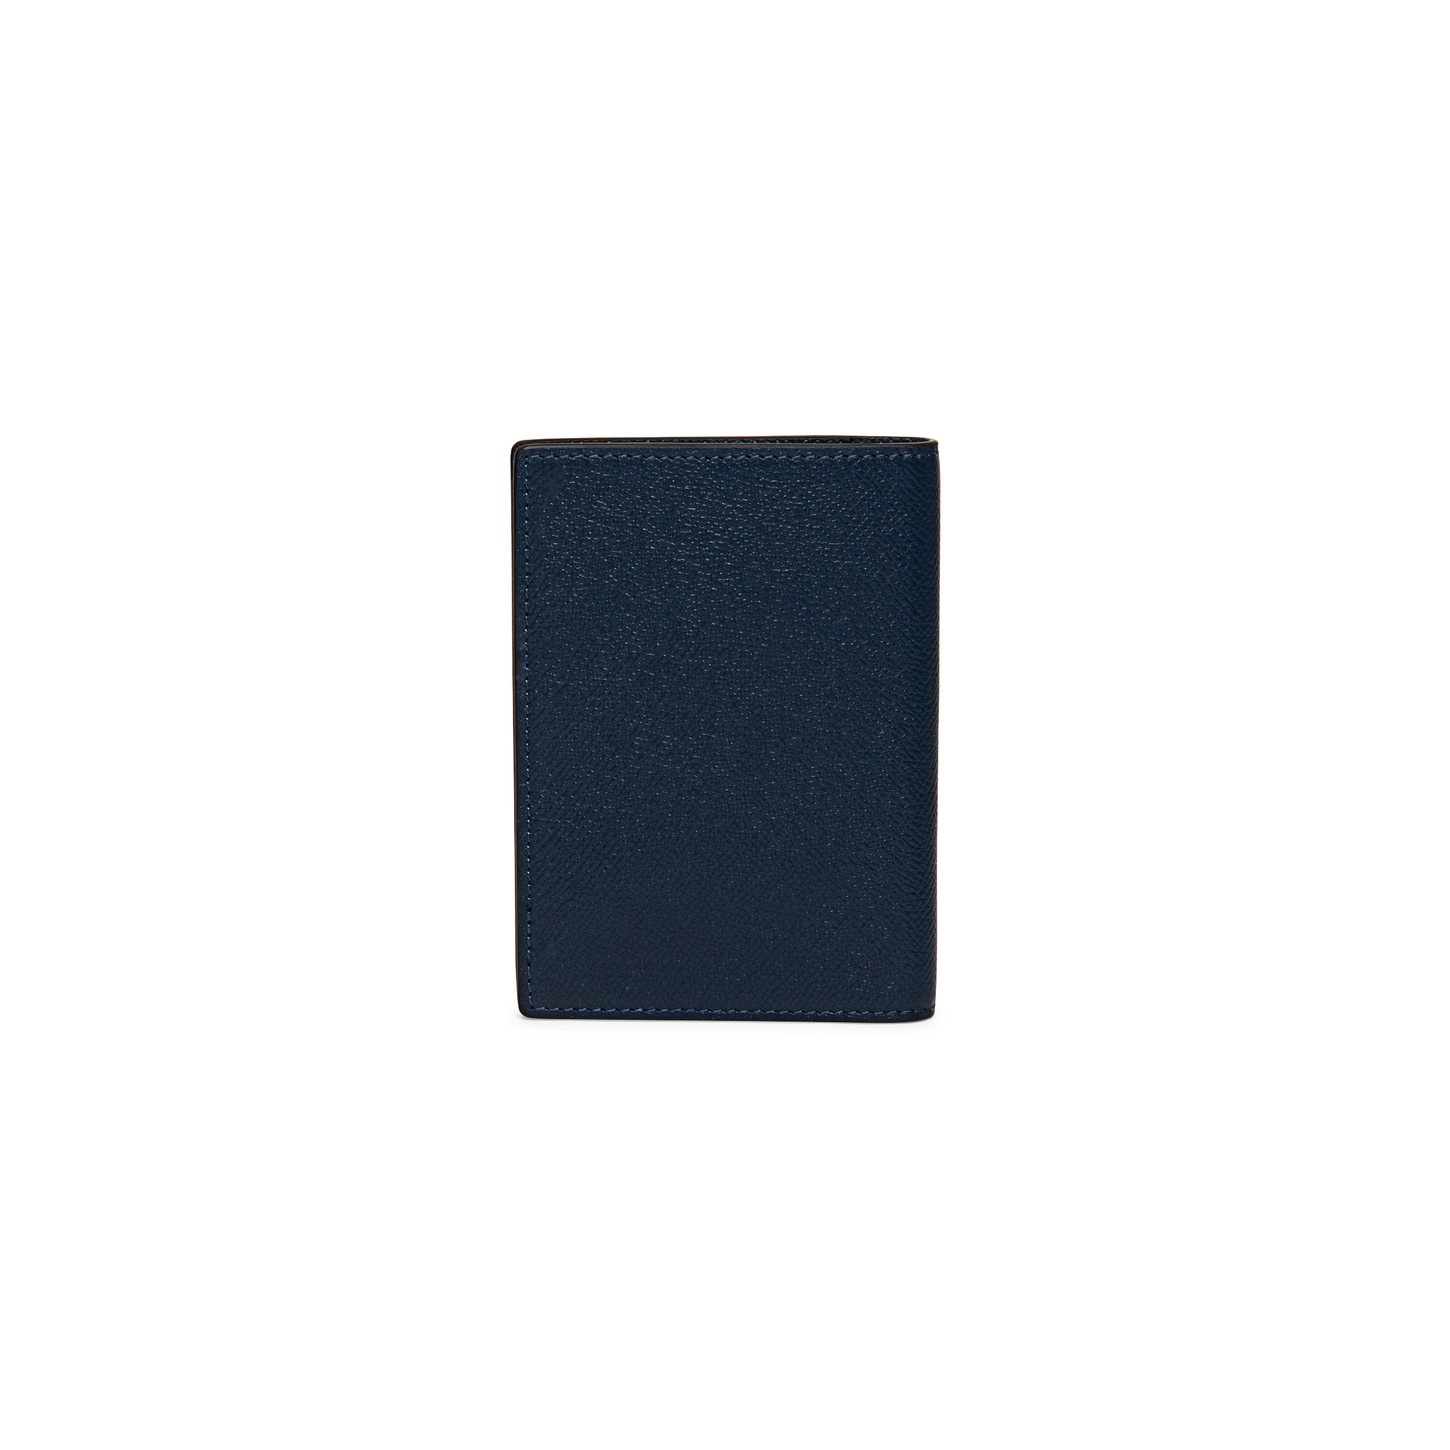 Blue saffiano leather passport case - 2